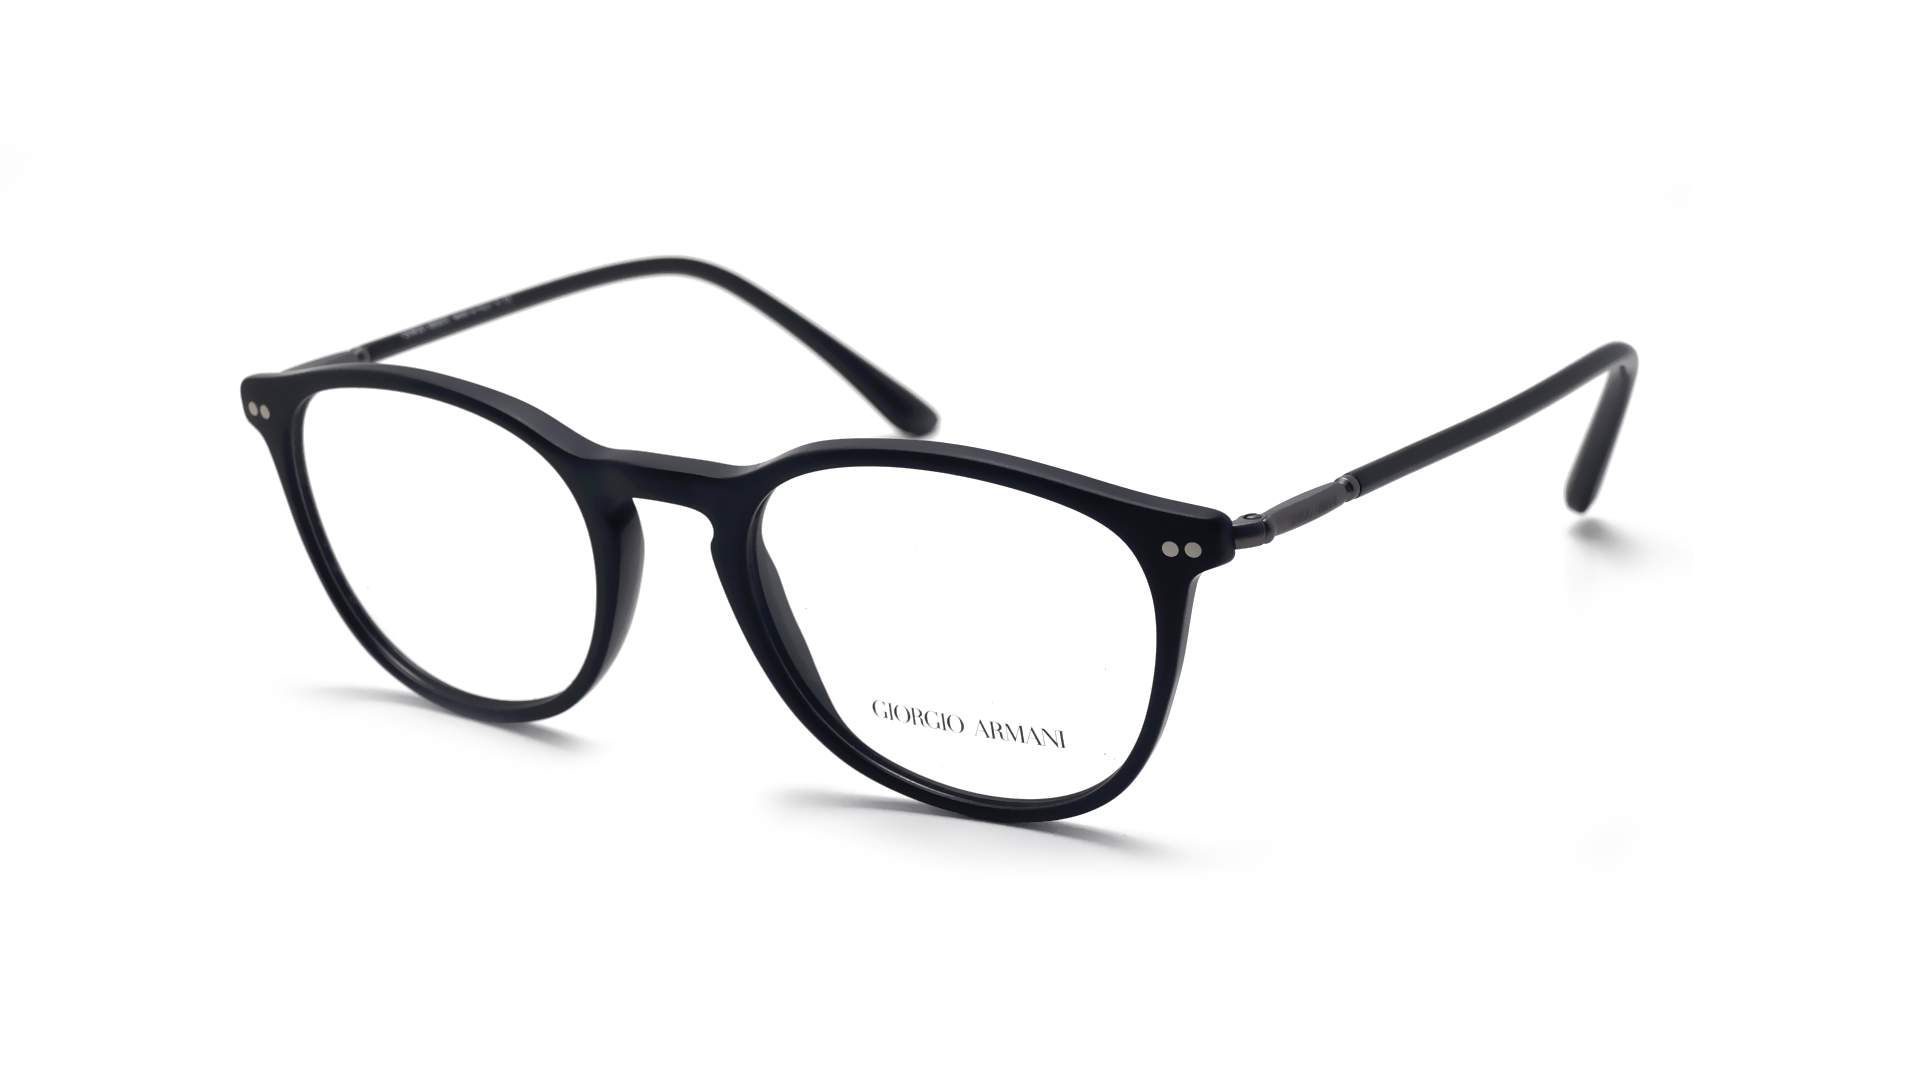 Giorgio Armani Women's Eyeglasses Online, SAVE 51%.